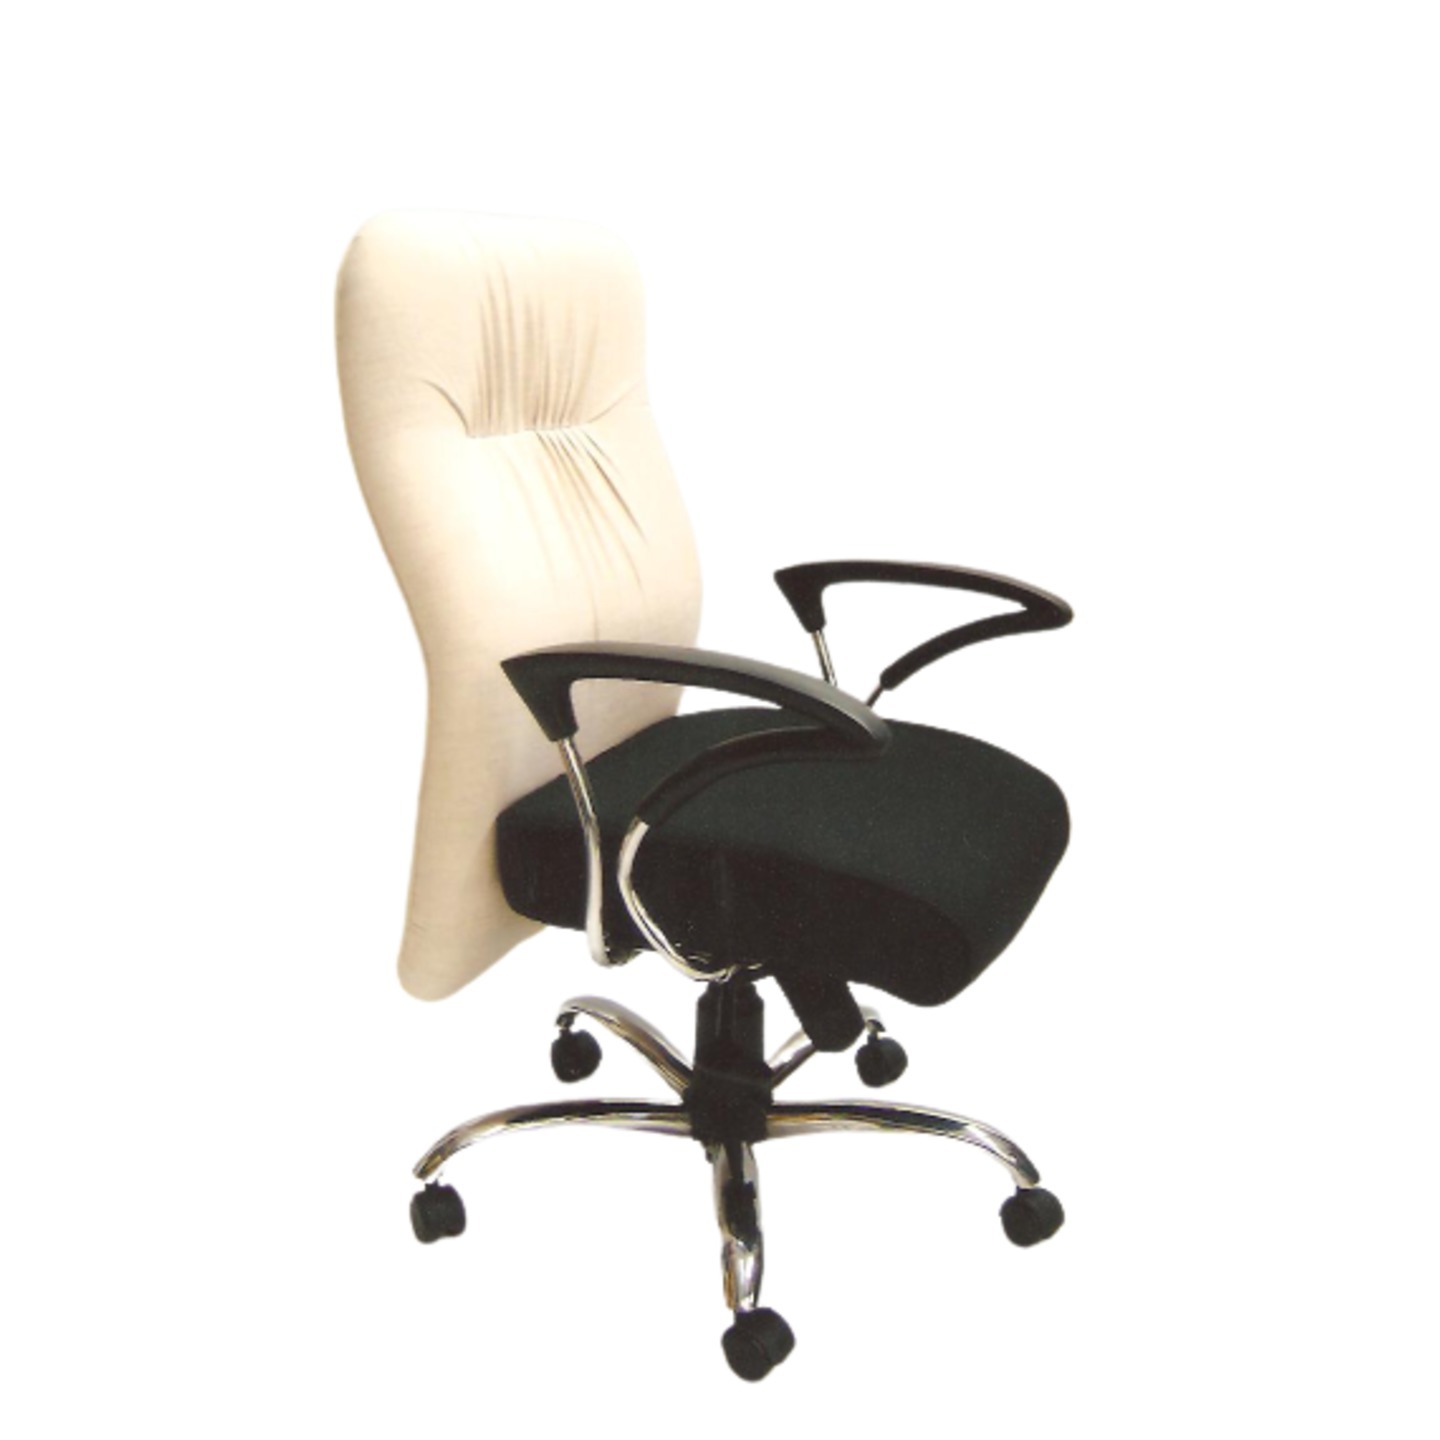 Medium Back Chair DD-802 Medium Back Chair